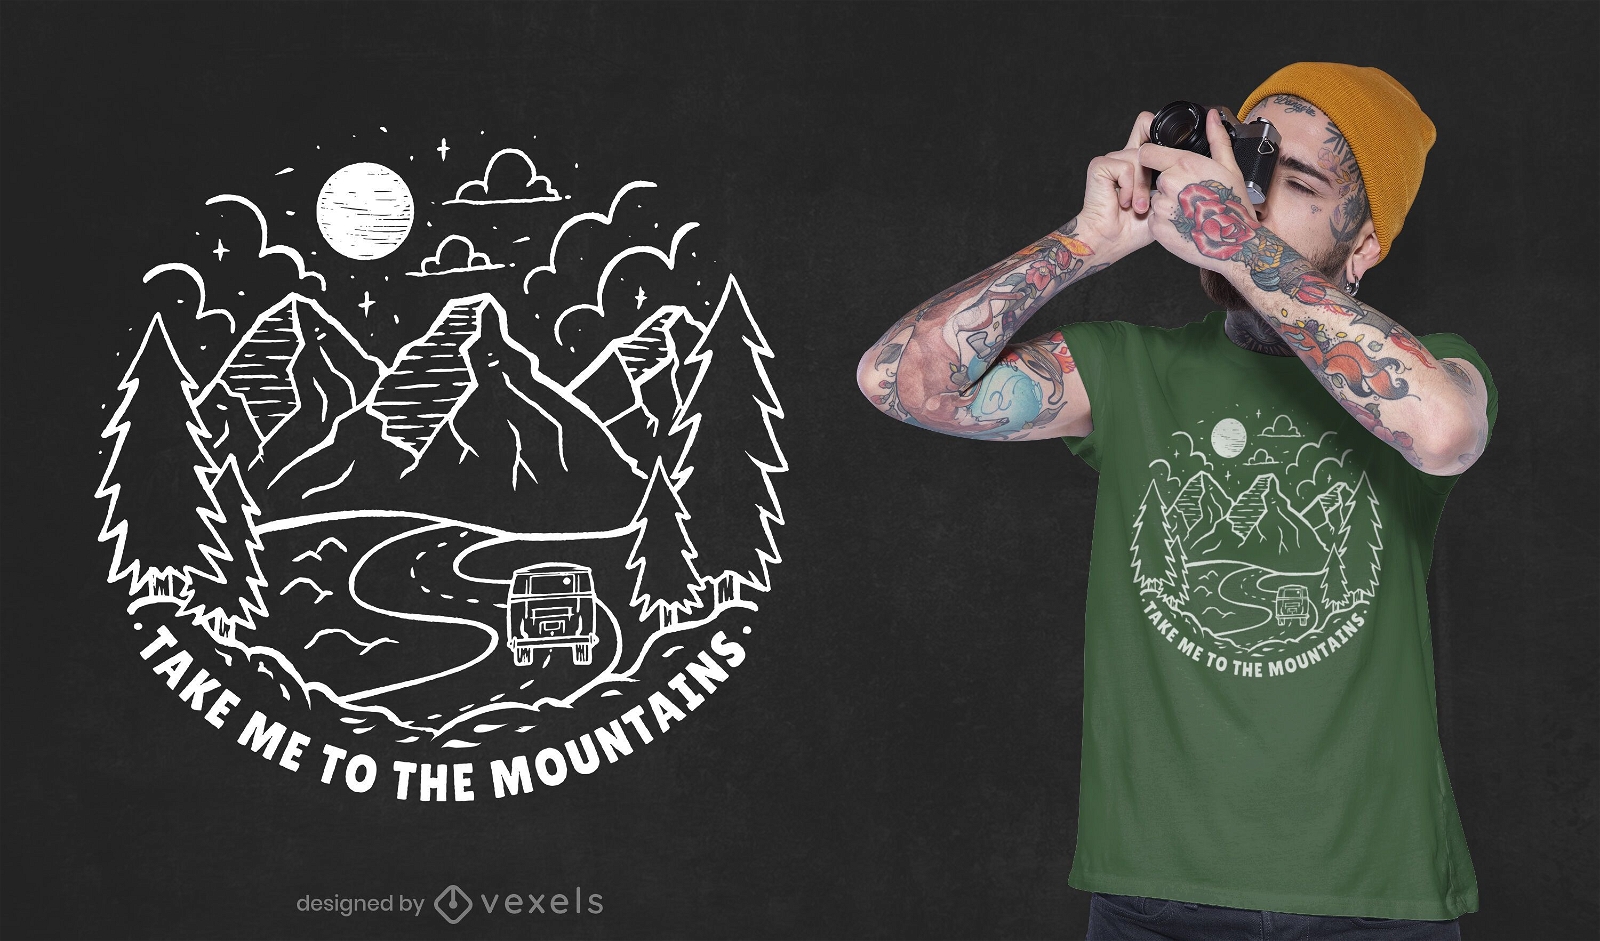 Take me to mountains t-shirt design